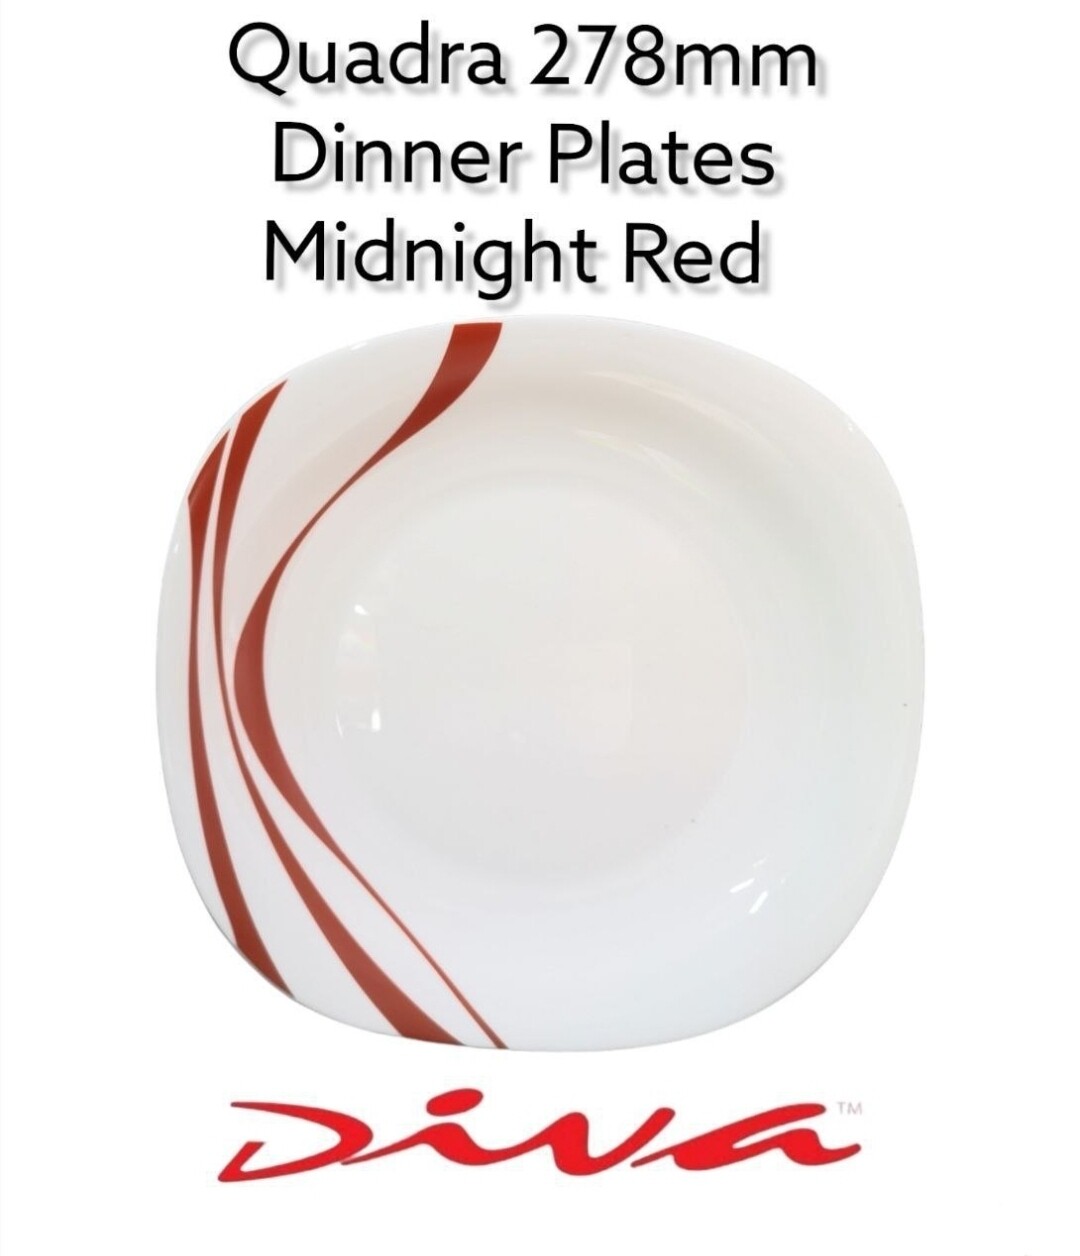 Diva 11" Quadra Square Dinner Plates Midnight Red 3pcs